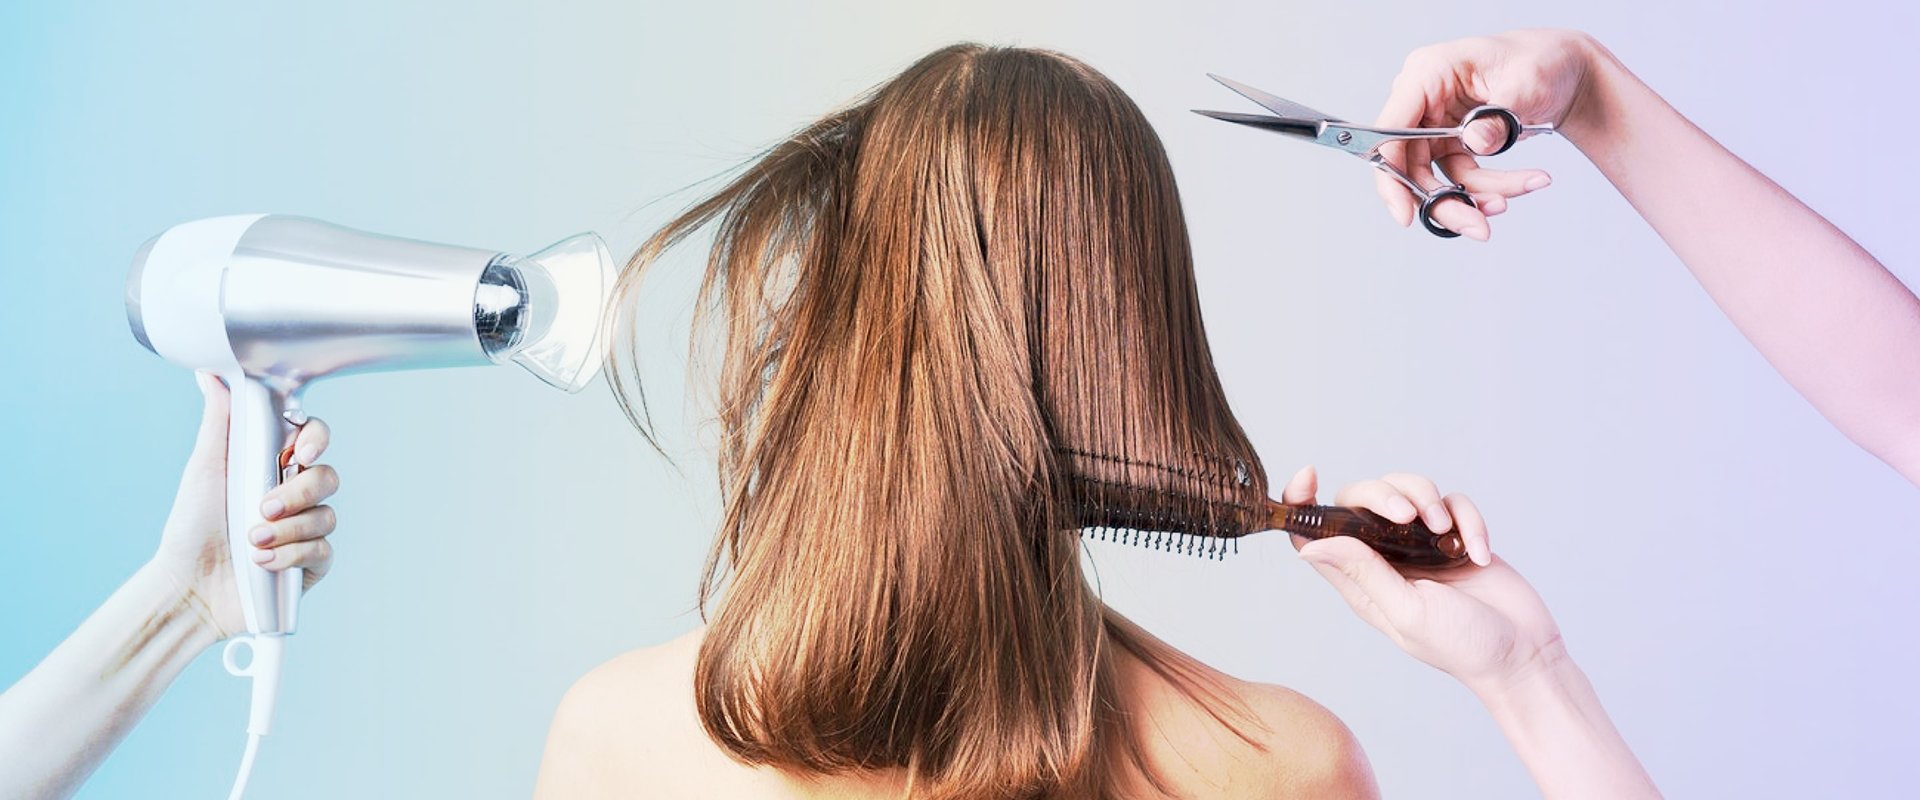 Hair Straightening Products - L'Oréal Paris